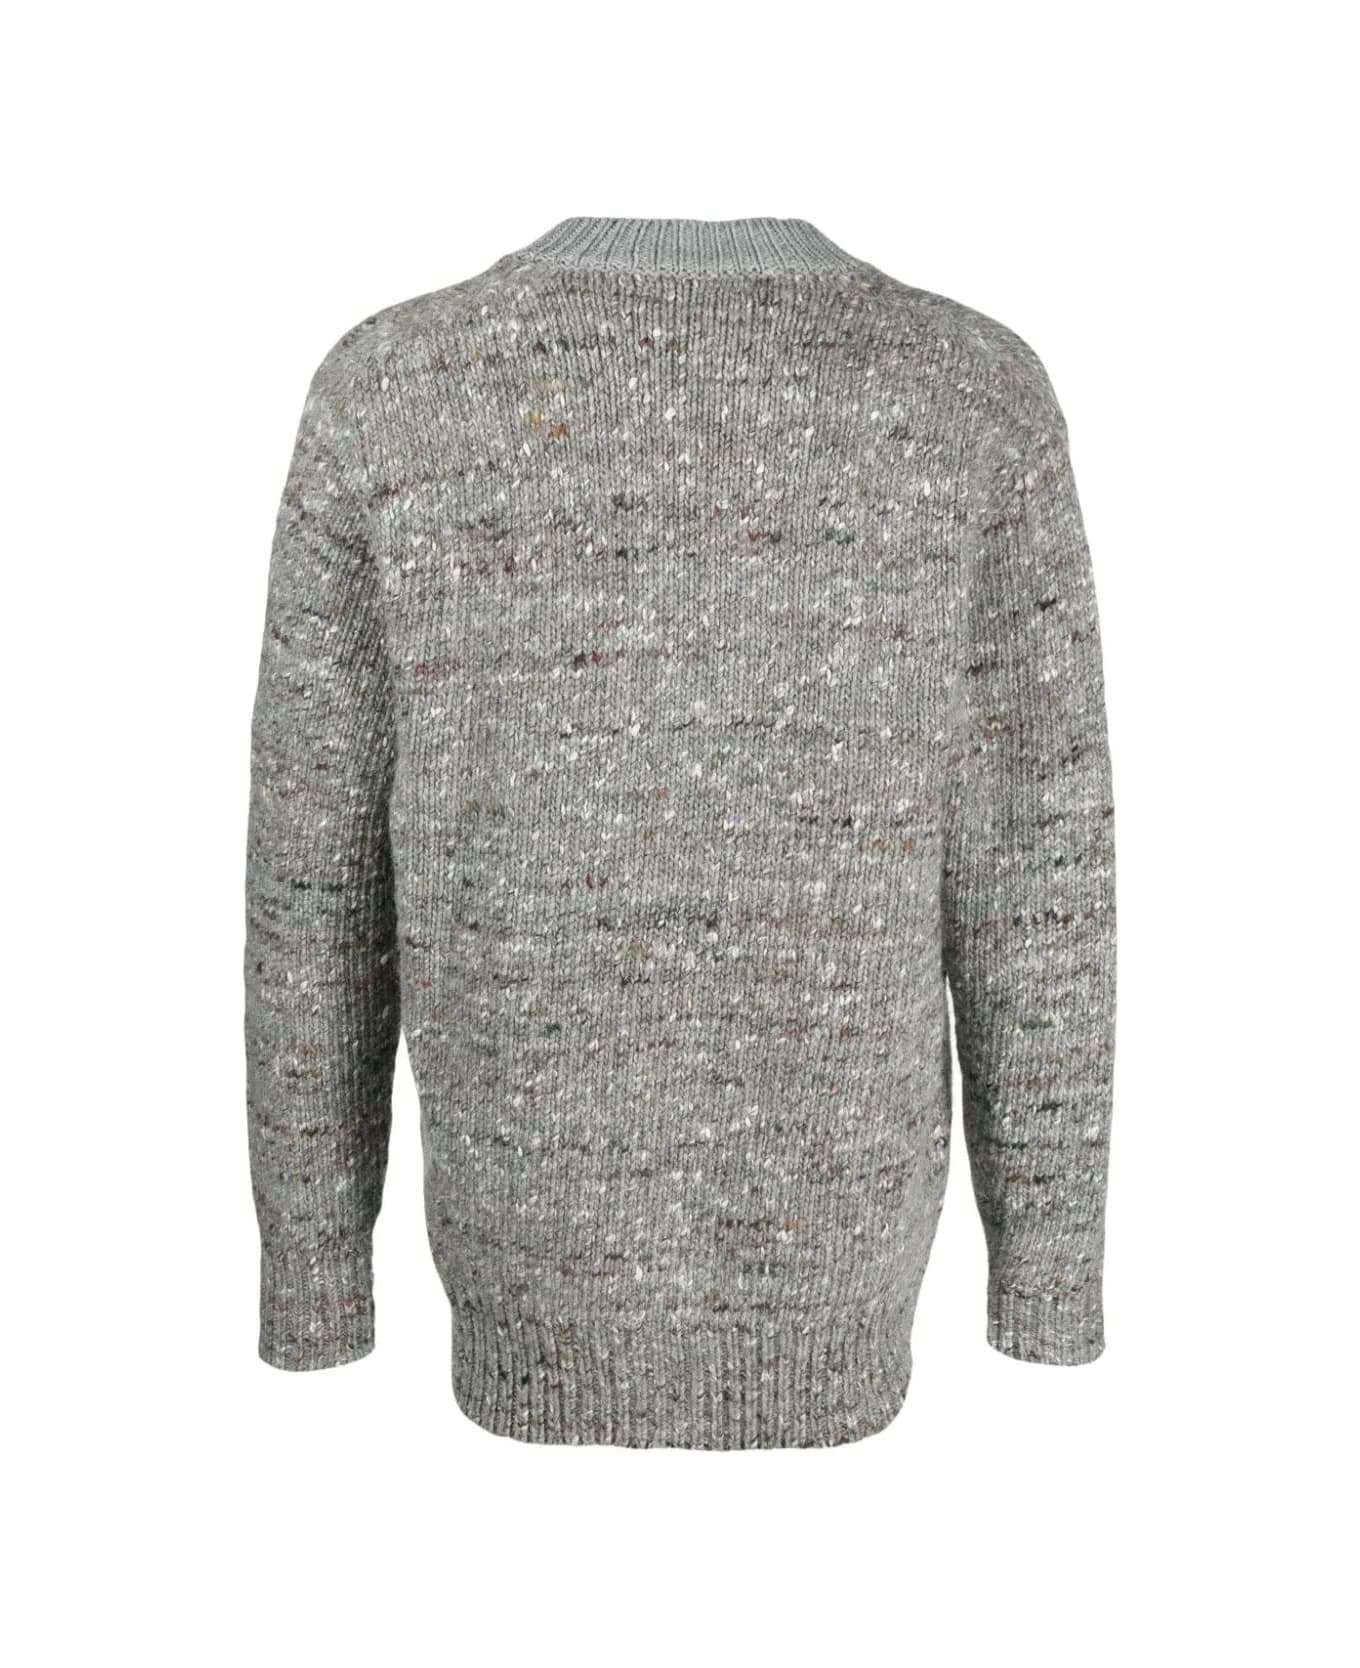 Lardini Man Knit Sweater - Grey